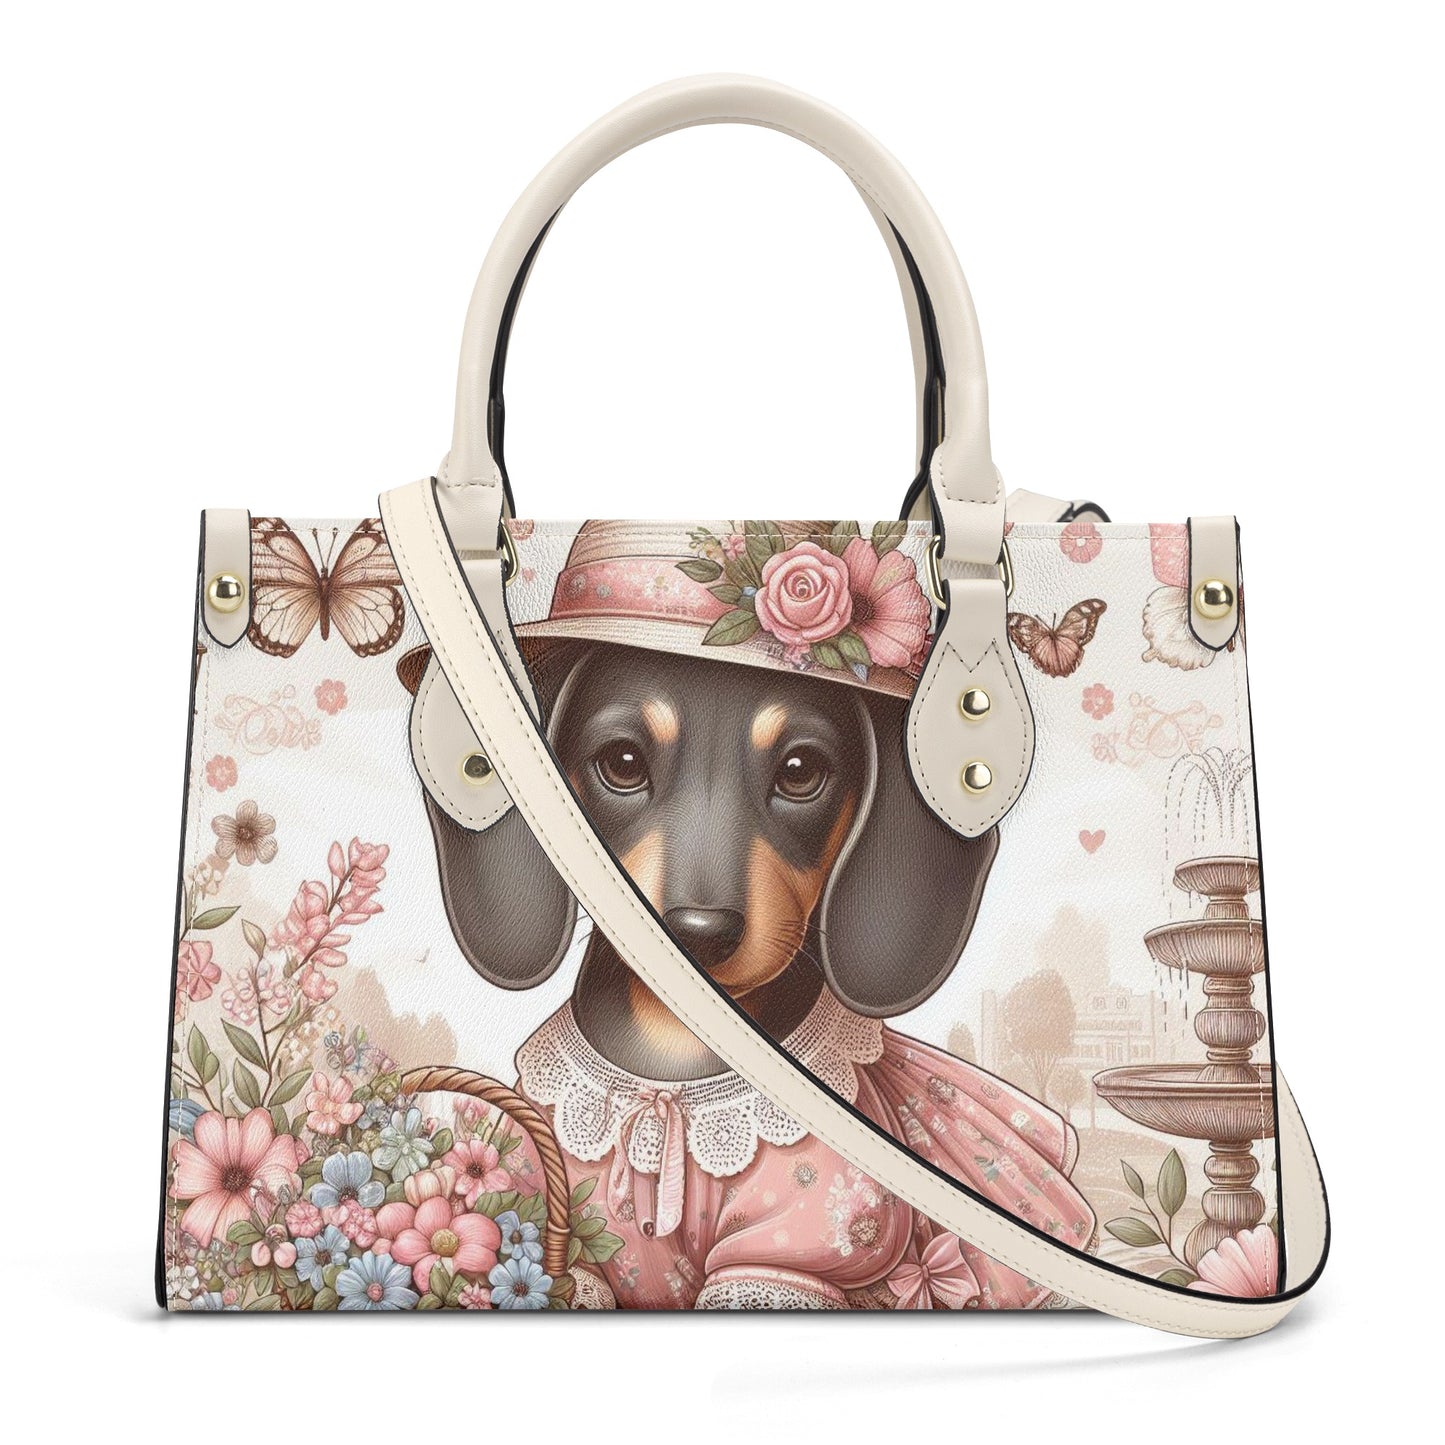 Blink - Luxury Women Handbag